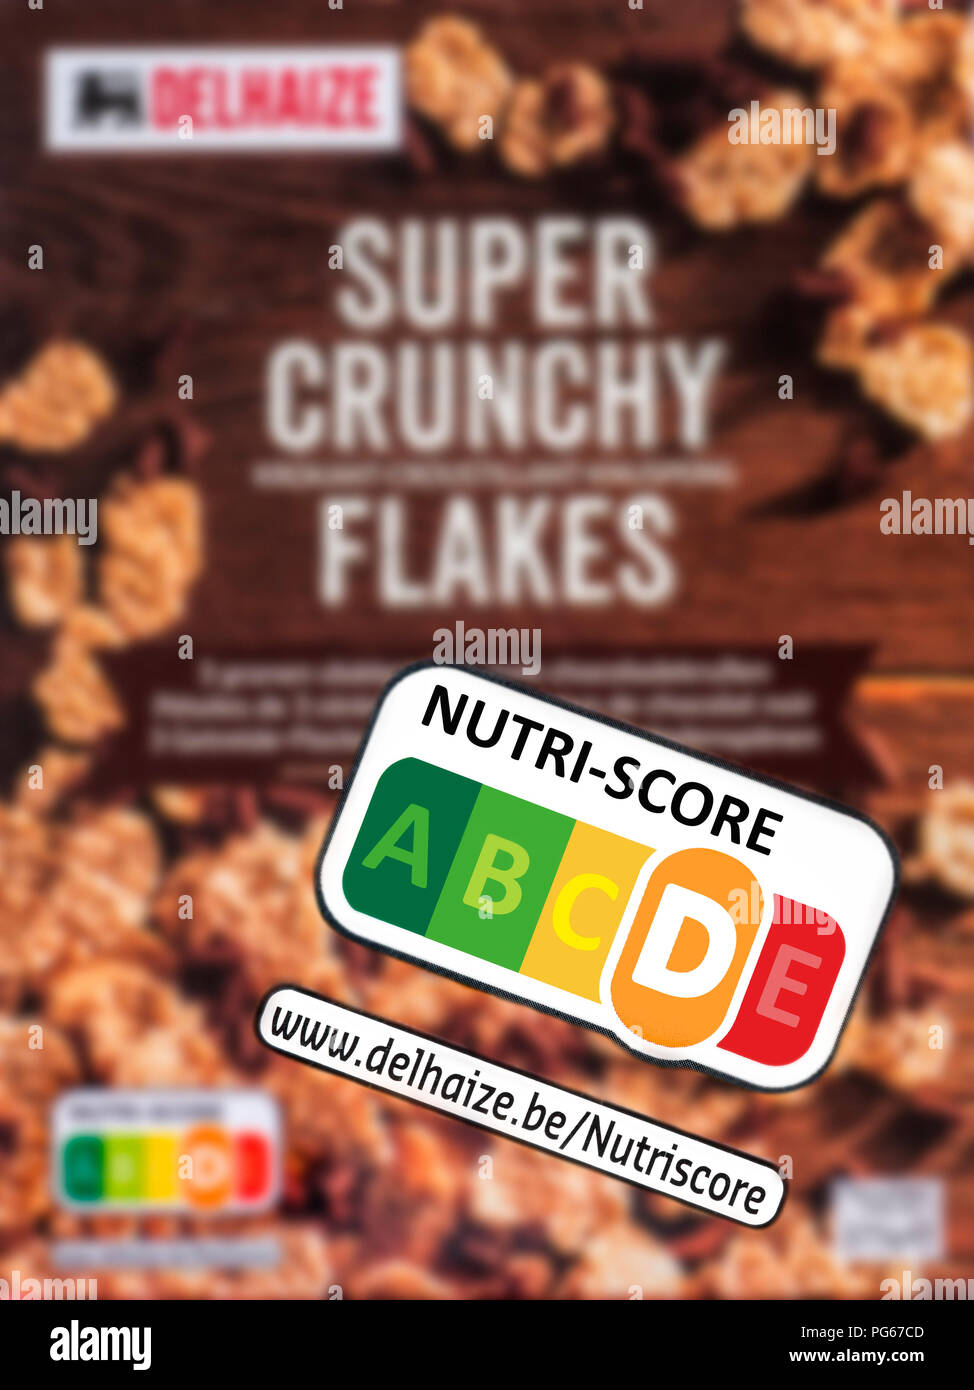 Nutritional label Nutri score on box of Belgian Delhaize Super Crunchy Flakes Stock Photo